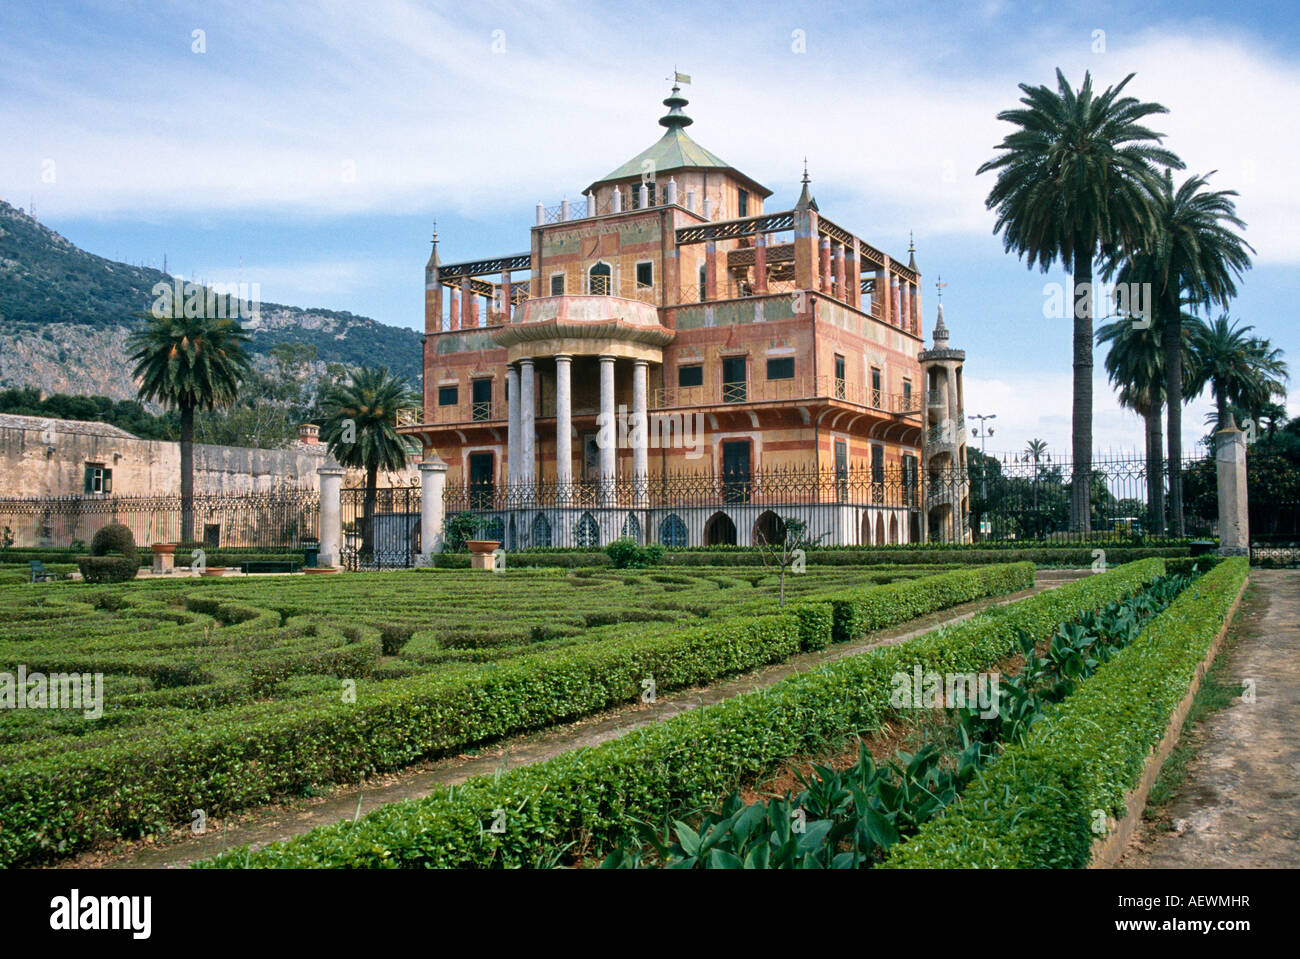 Palazzina Cinese LIttle Chinese Palace Palermo Sicily Stock Photo